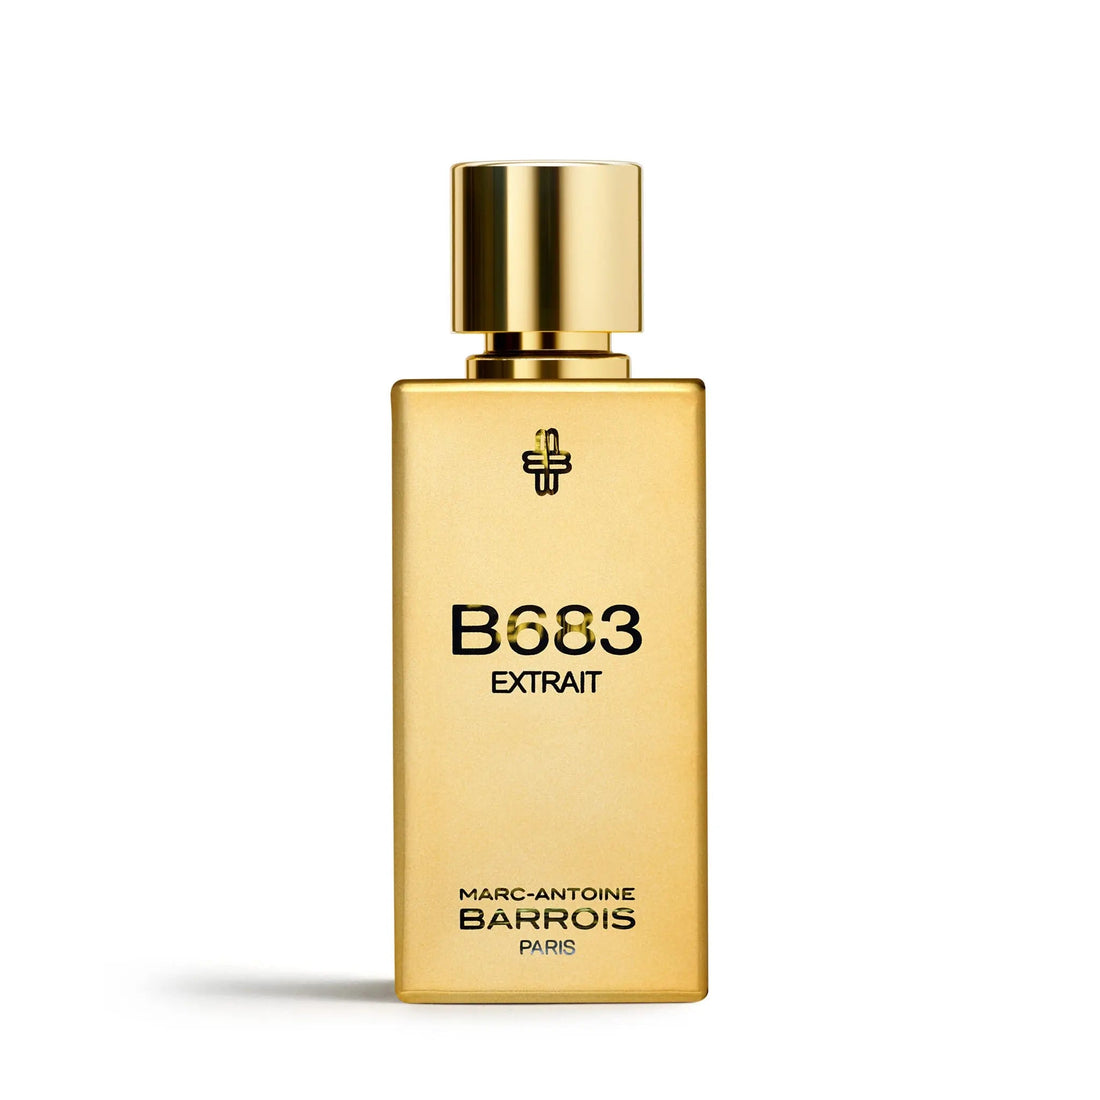 Barrois B683 parfum extract - 50 ml